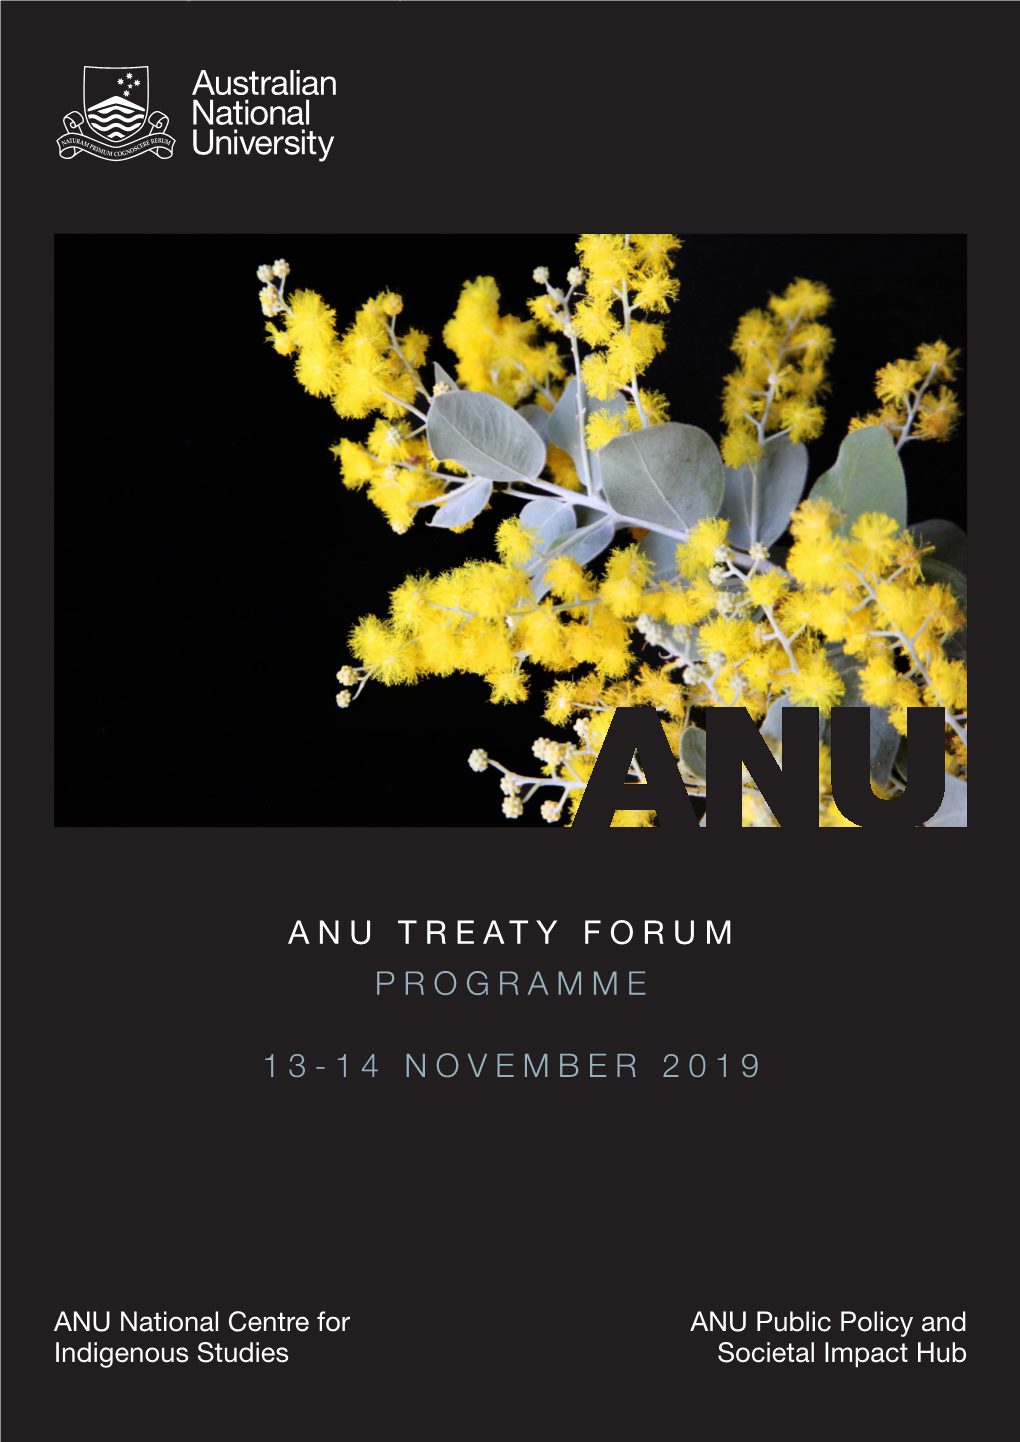 Anu Treaty Forum Programme 13-14 November 2019